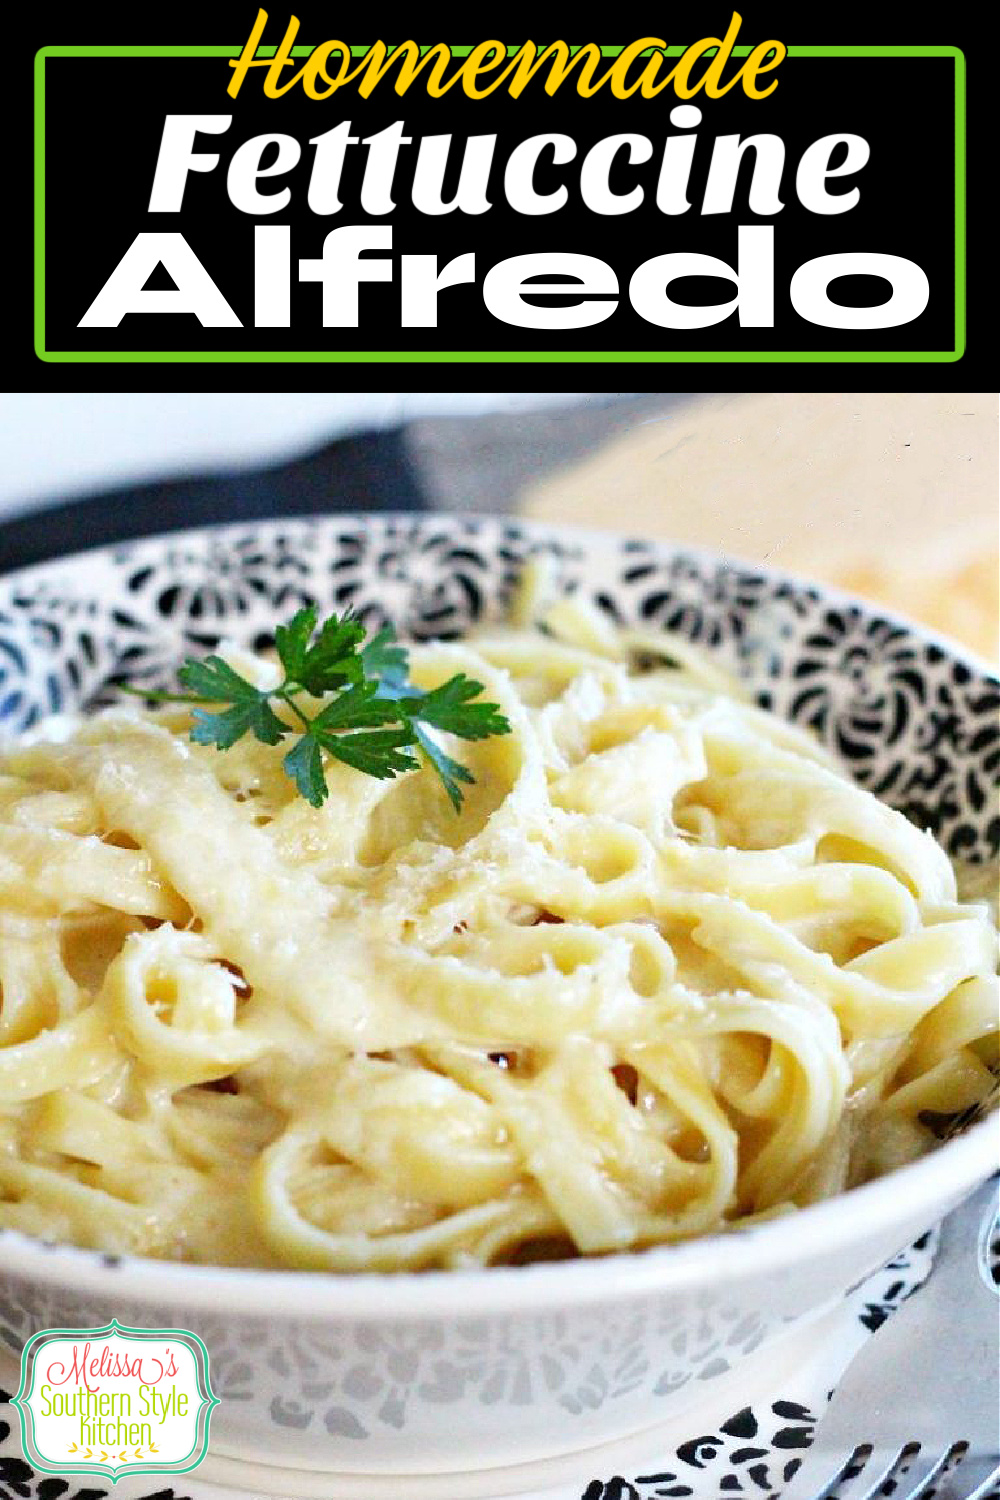 Make restaurant quality Fettuccine Alfredo at home #Alfredosauce #fettuccine #pasta #food #recipes #Italian #southernrecipes #southernfood #melissassouthernstylekitchen via @melissasssk